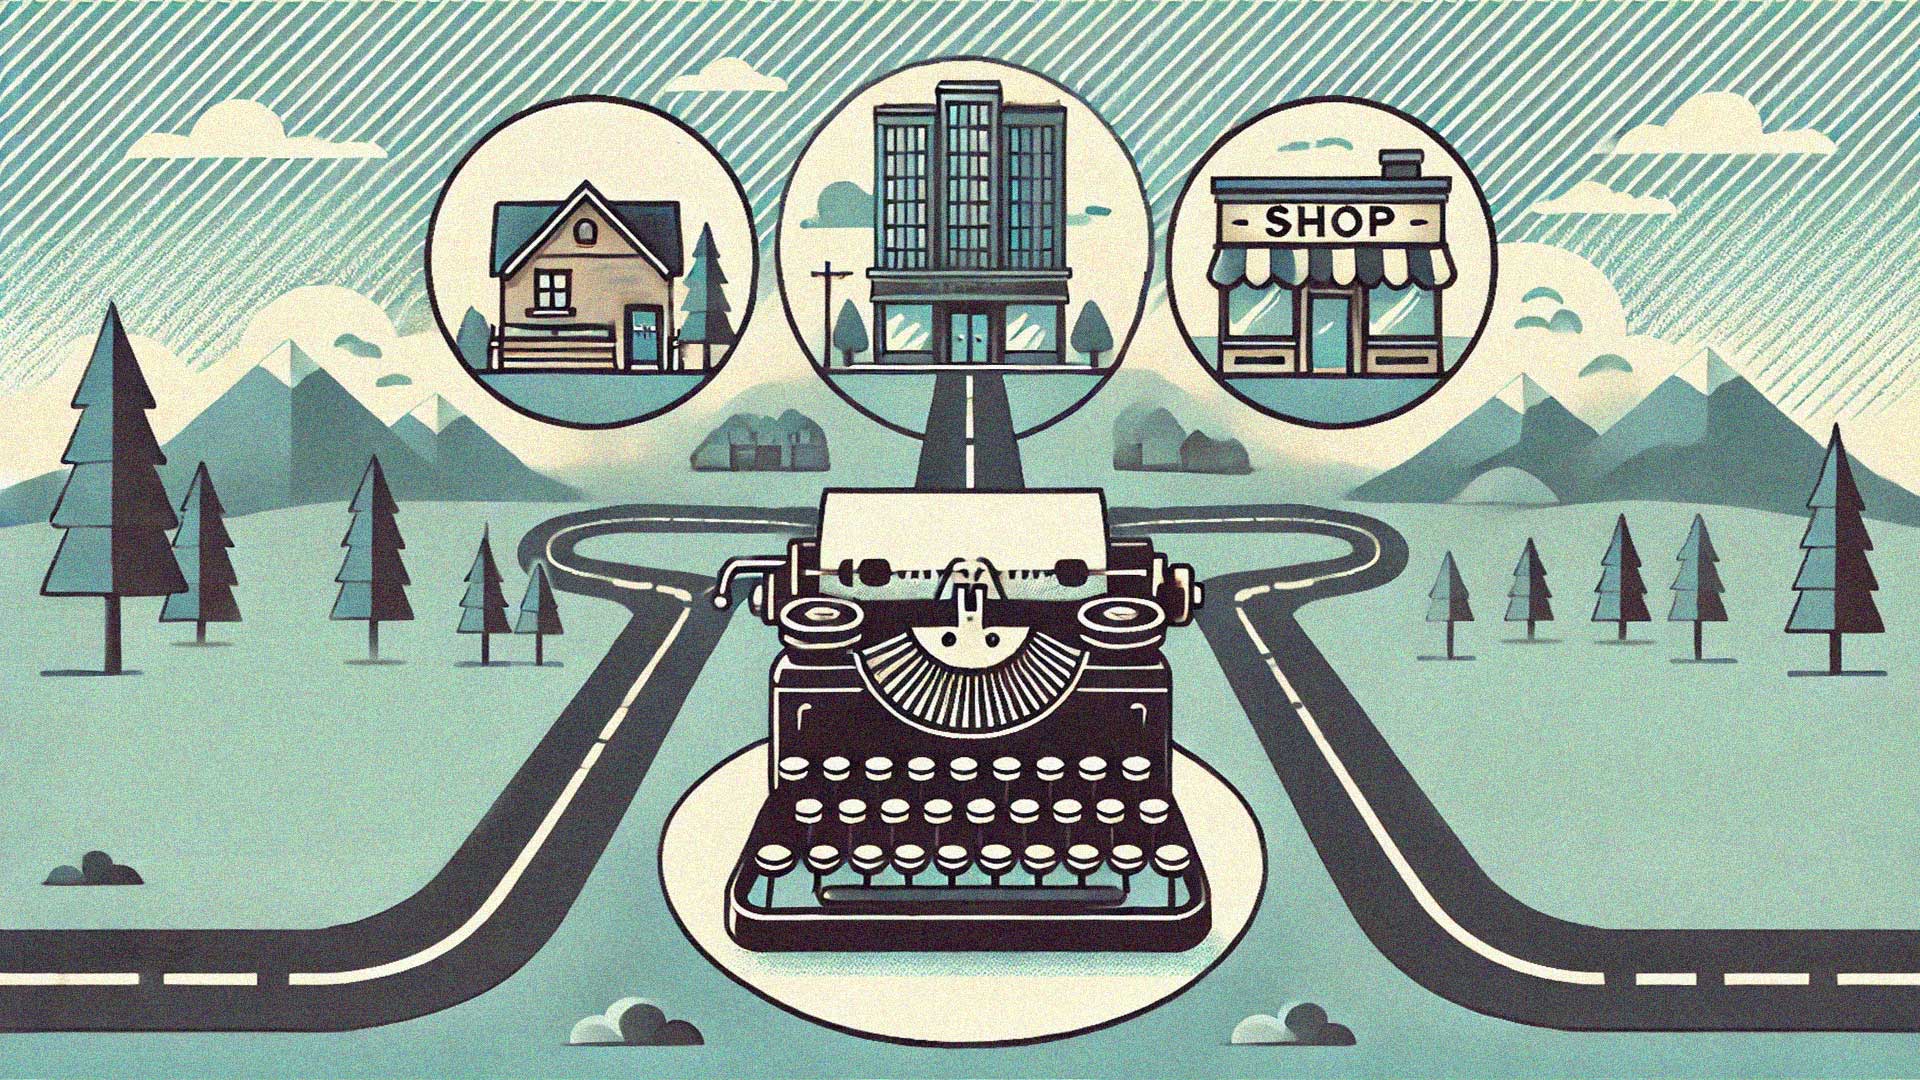 Illustration of a typewriter